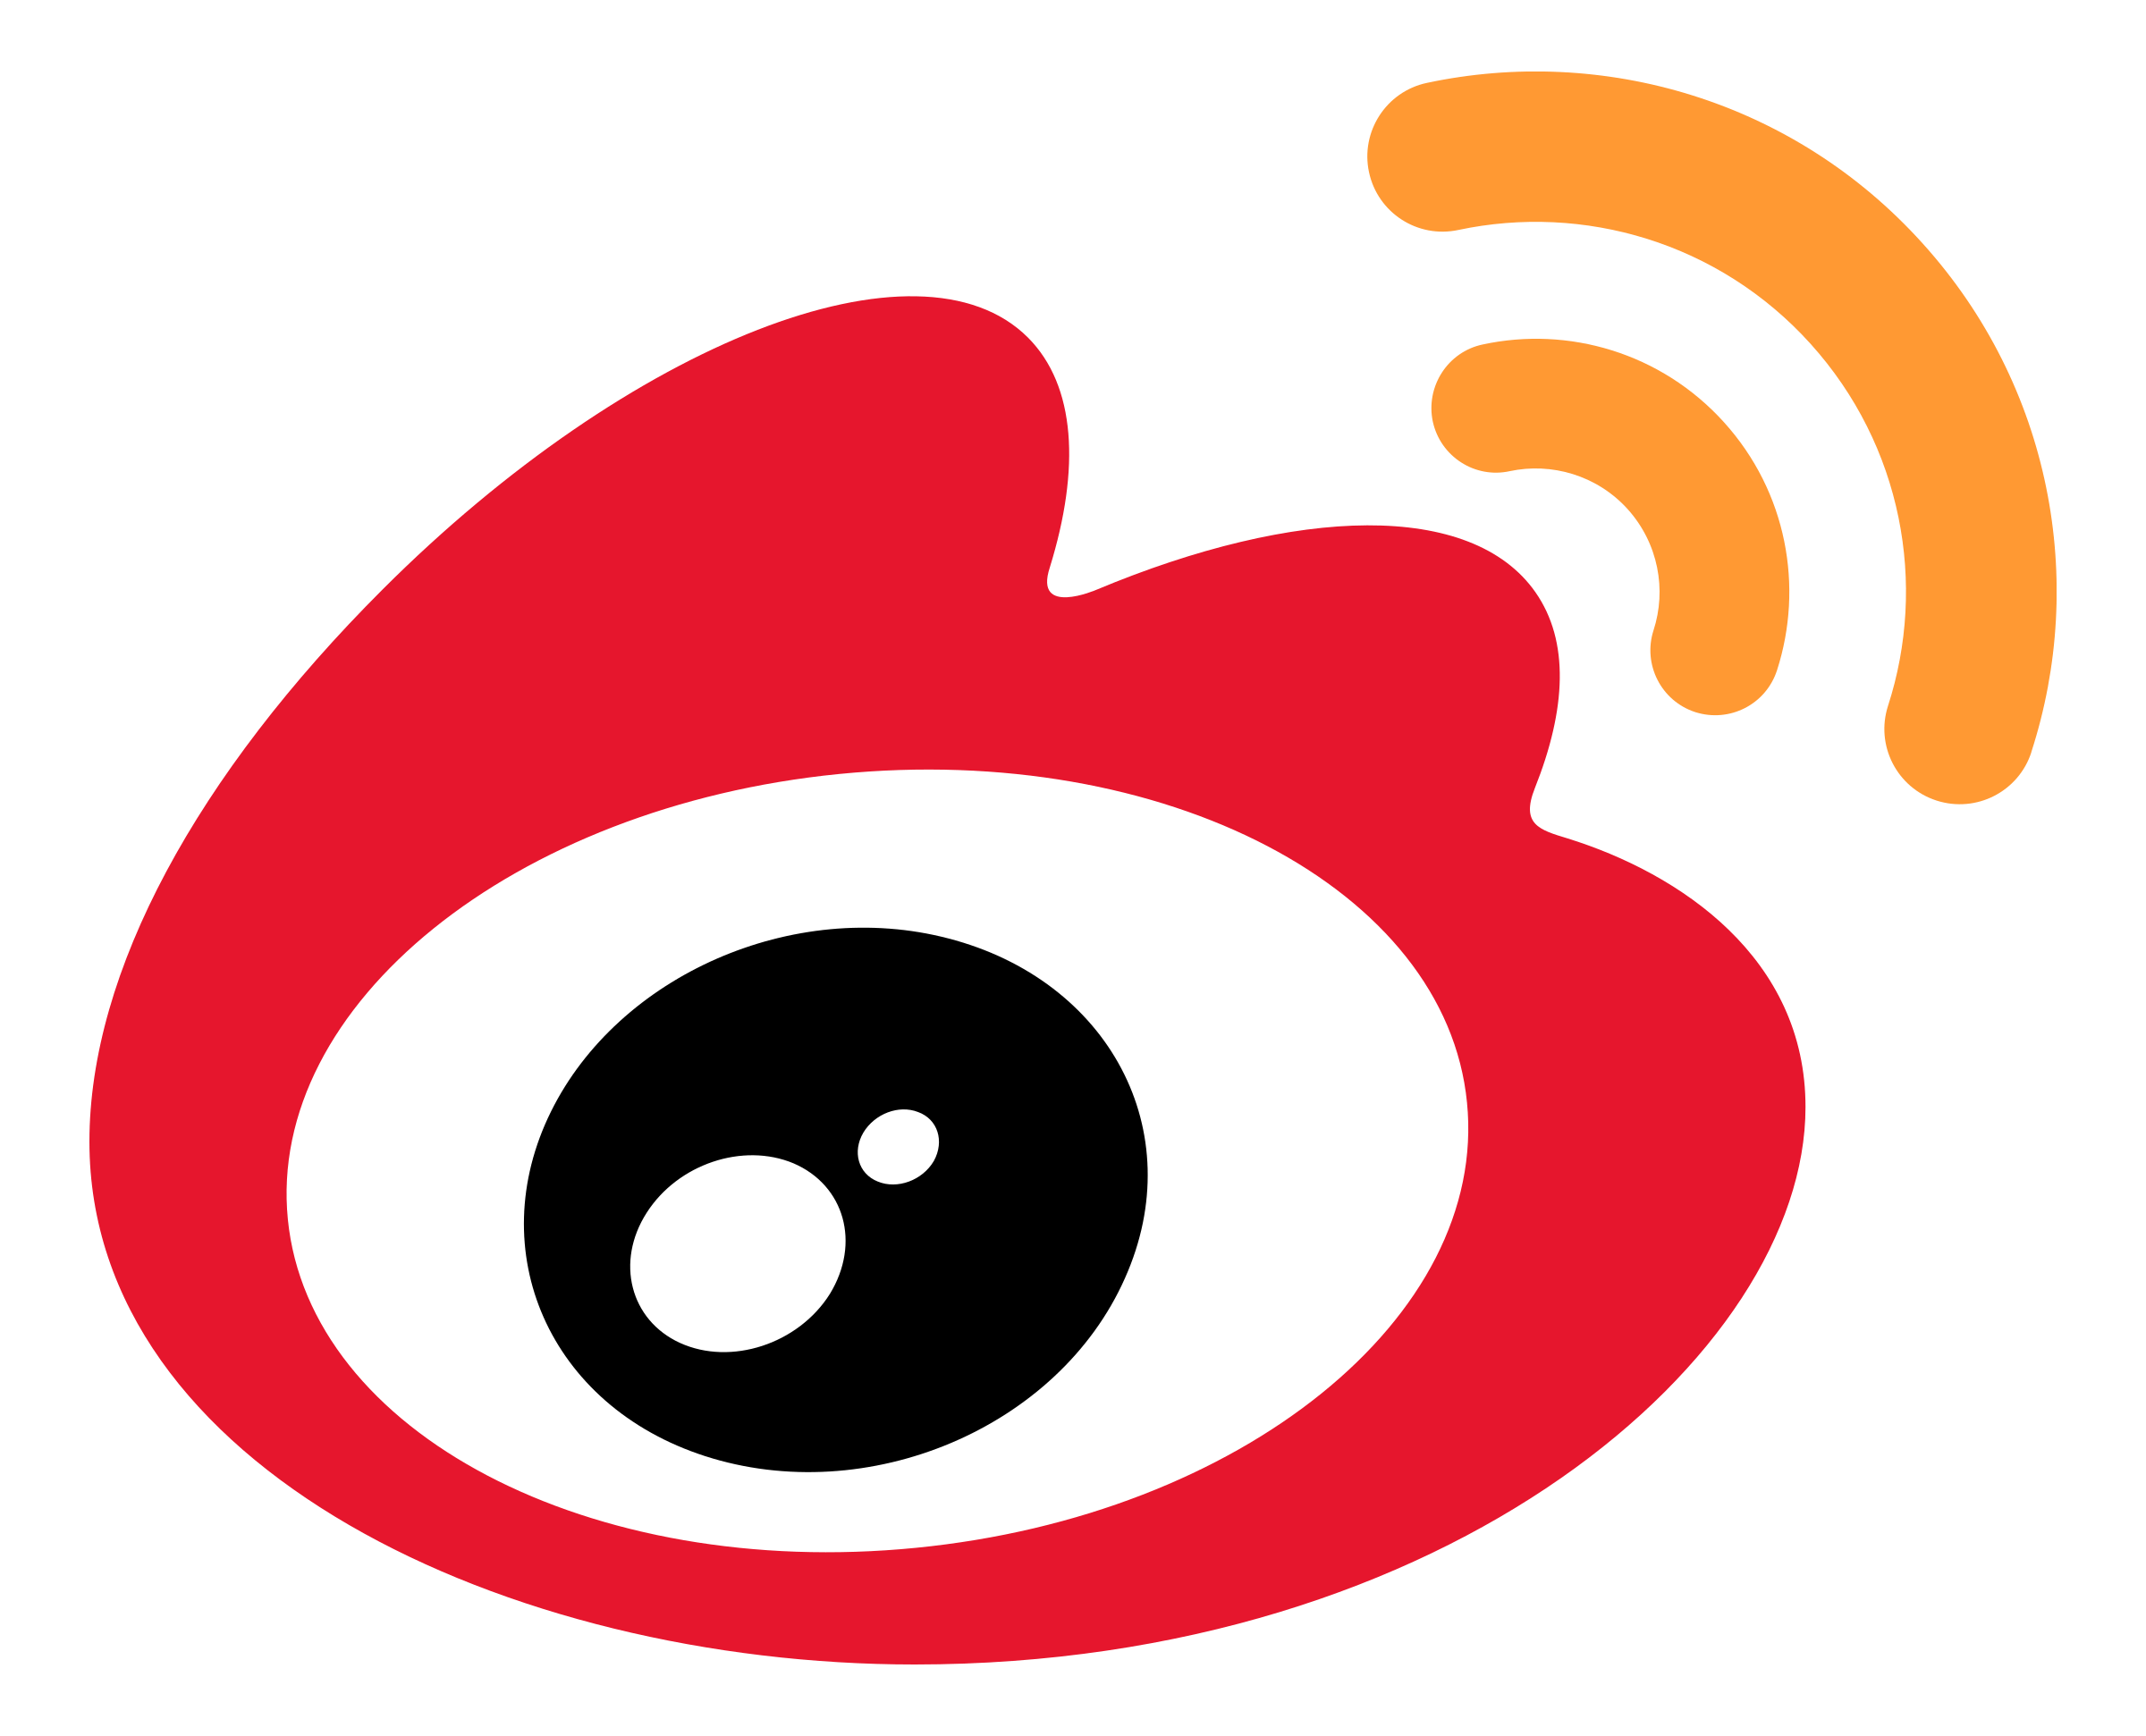 weibo logo (Chinese social media platform)